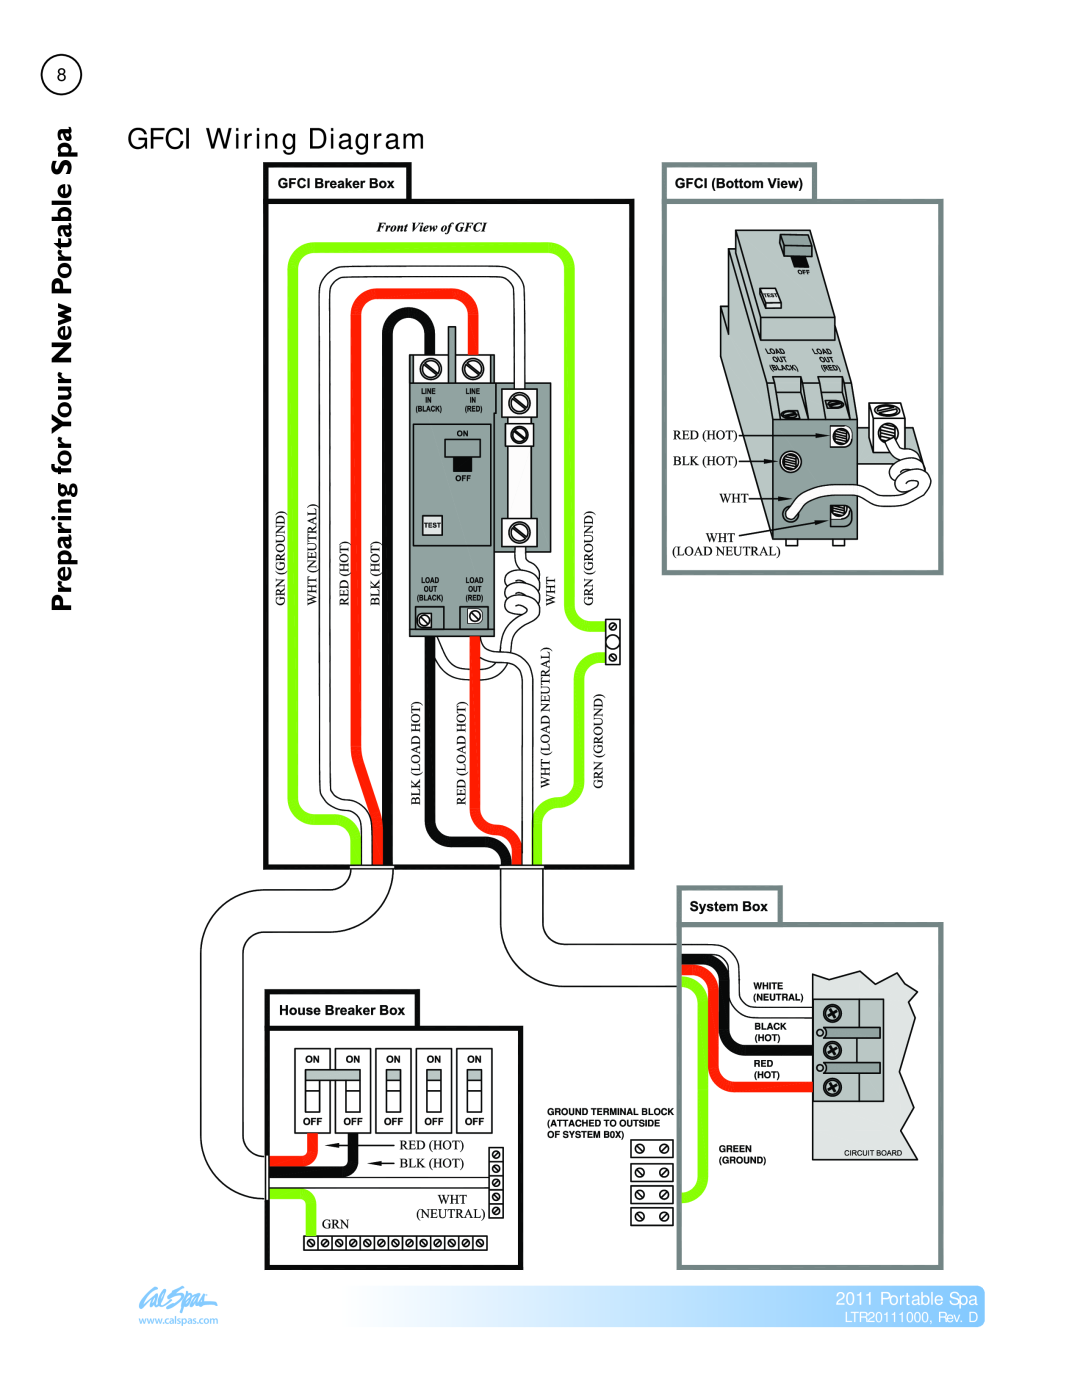 Cal Spas manual GFCI Wiring Diagram, Preparing forYour New Portable Spa, LTR20111000, Rev. D 